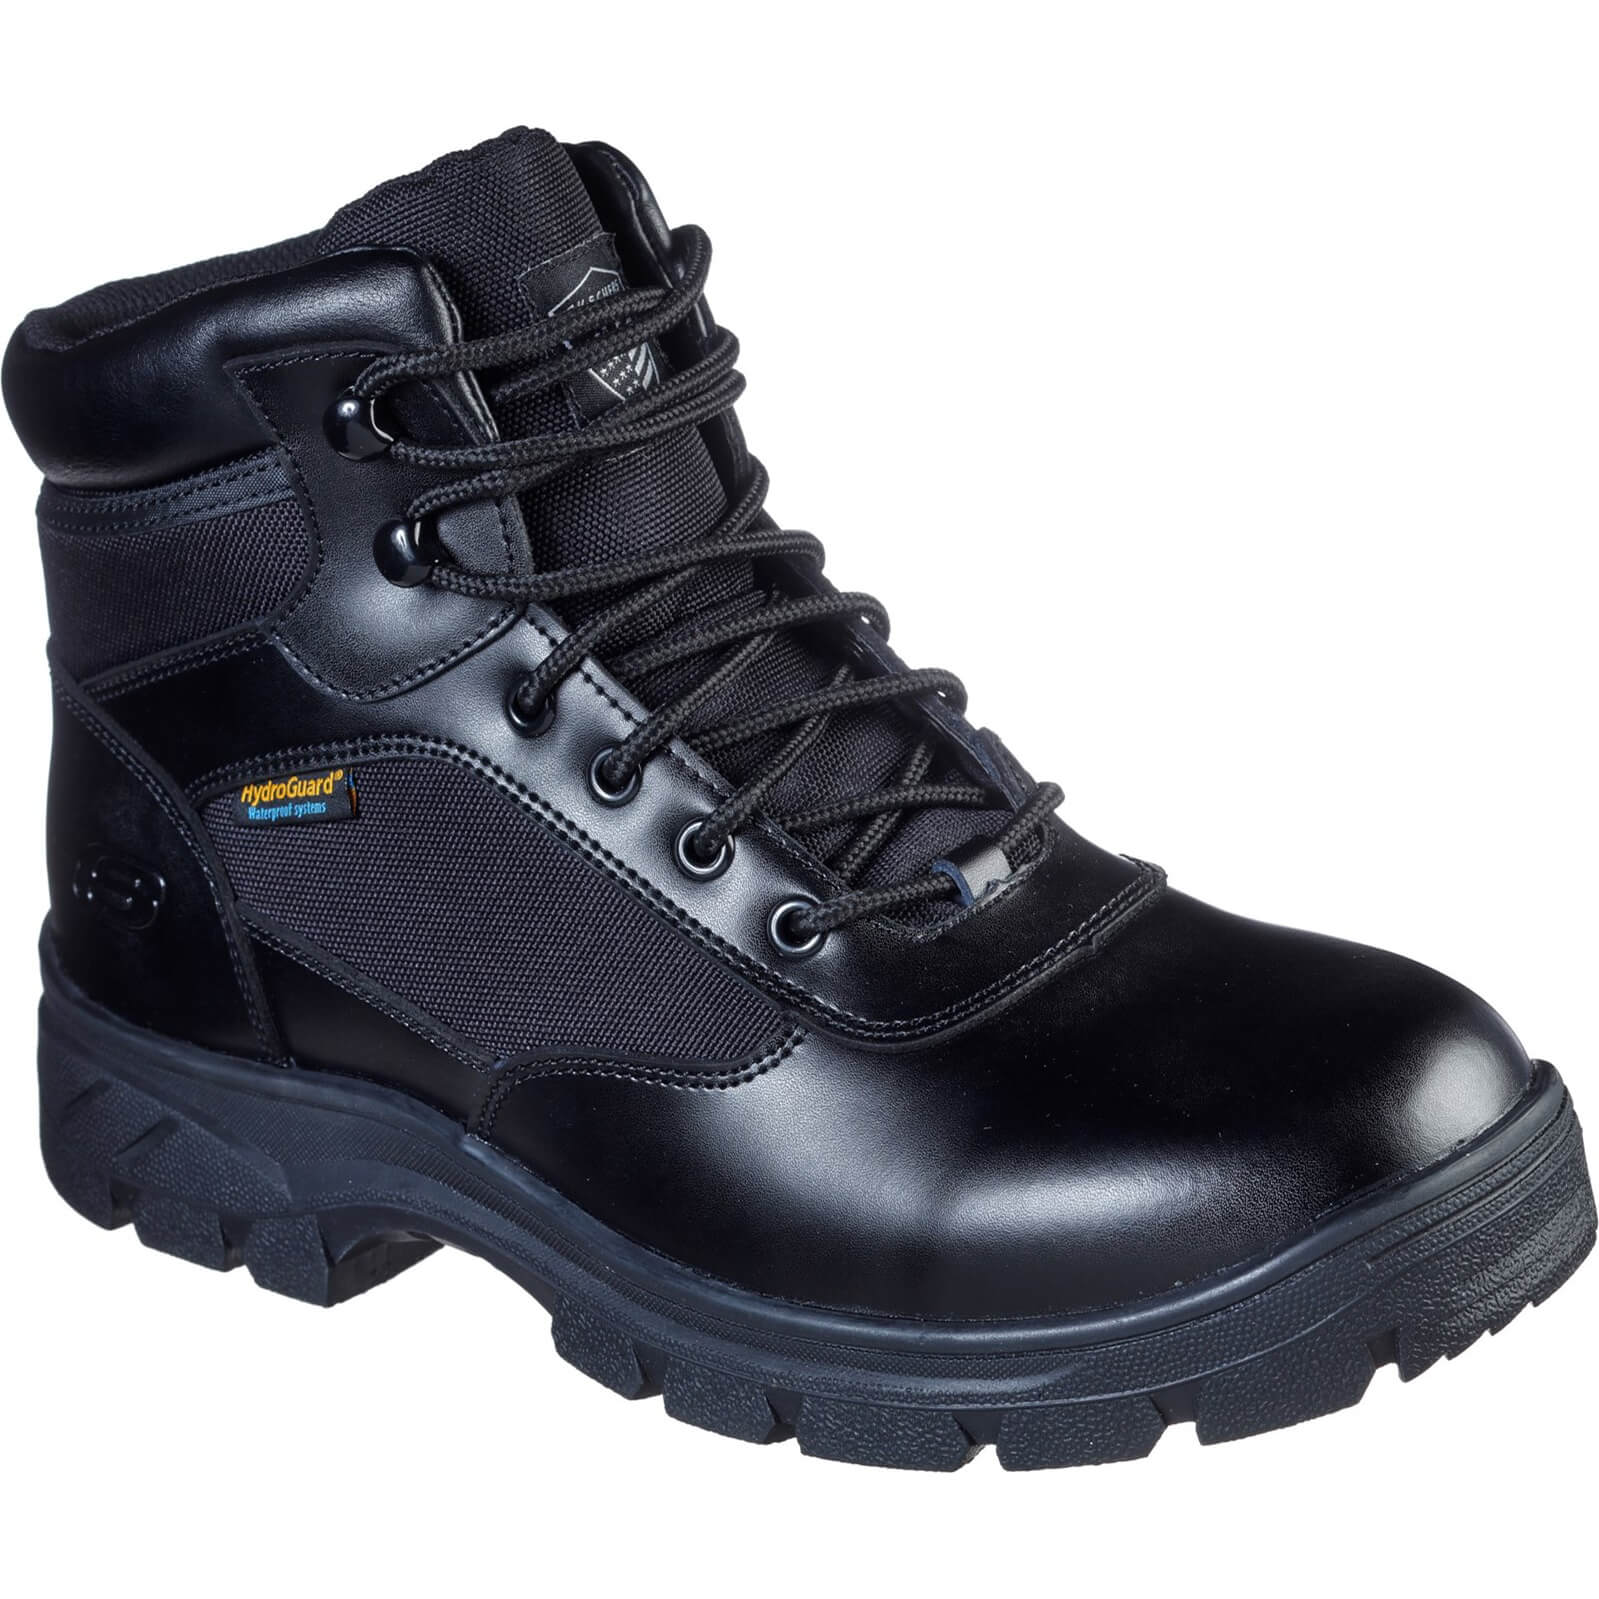 Skechers Wascana Benen Mens Waterproof Work Boots Black Size 6